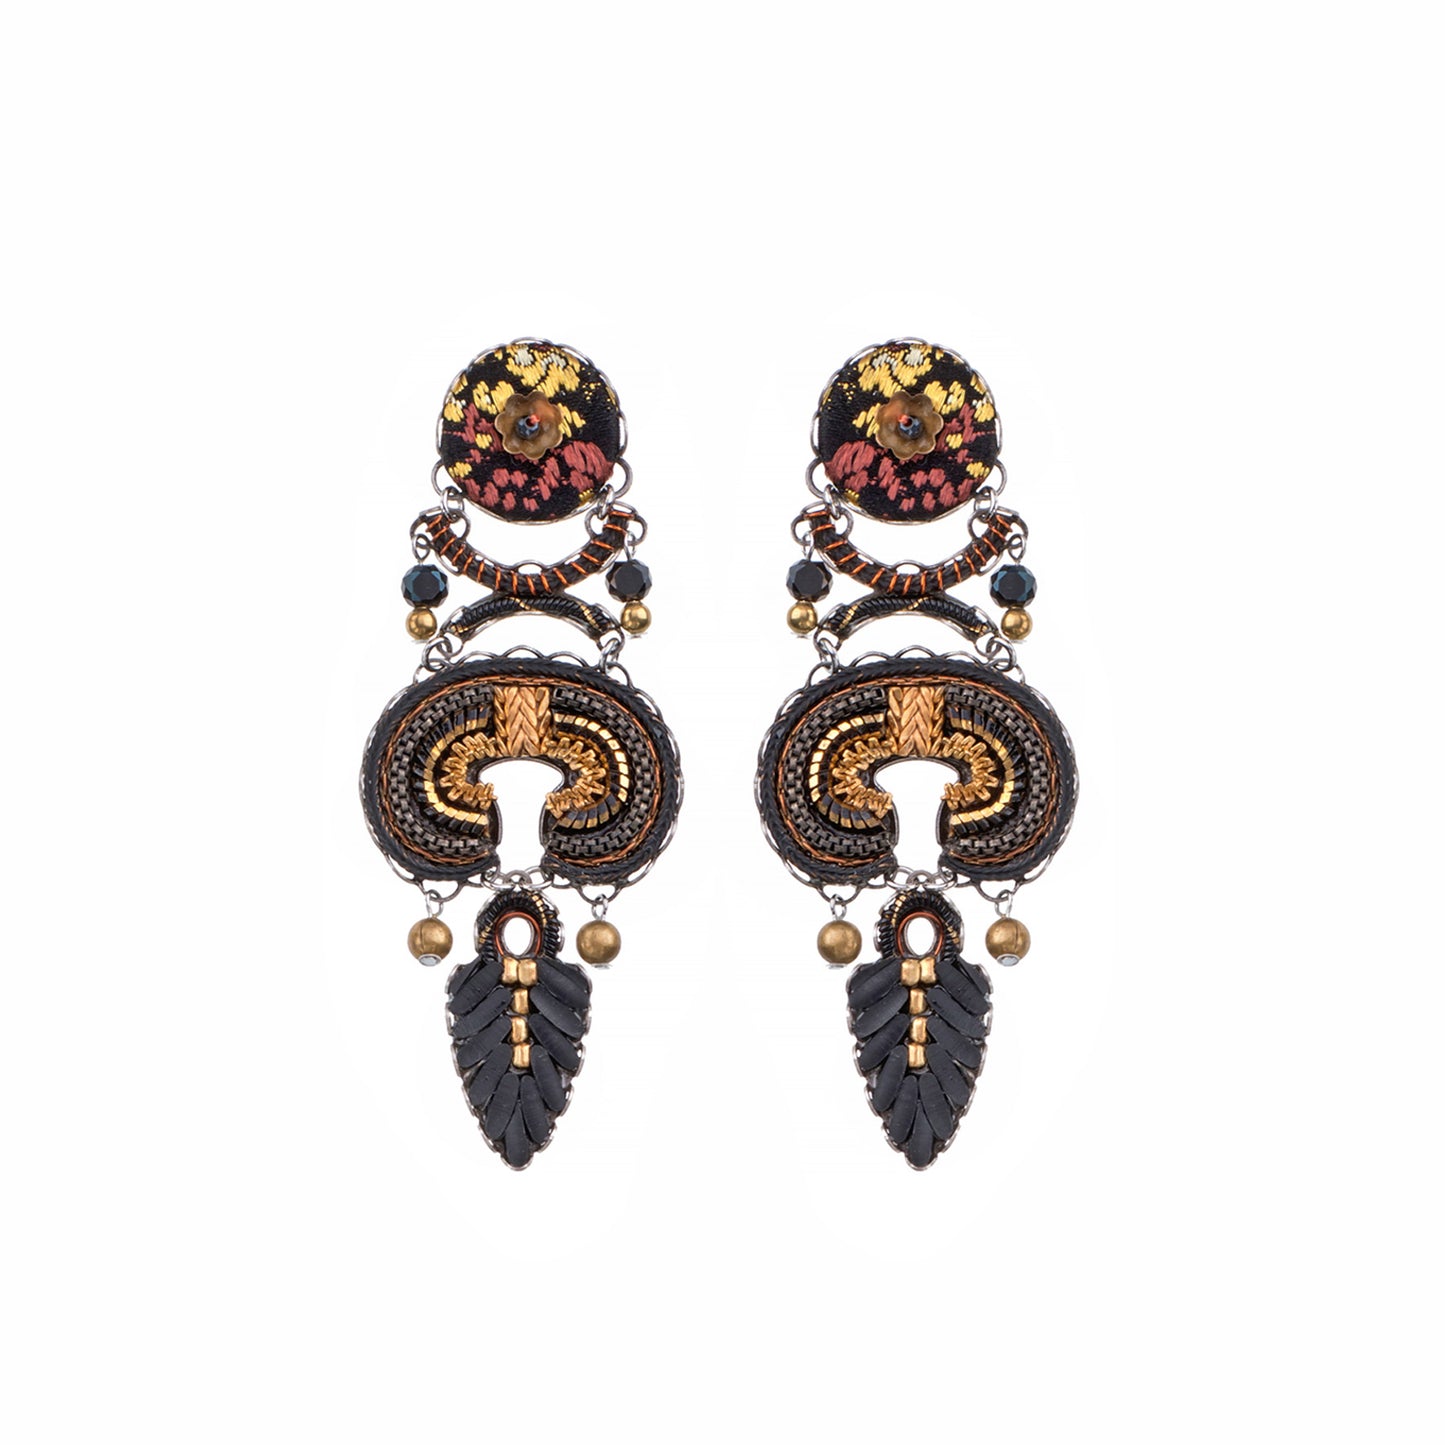 Indigo Royalty earrings